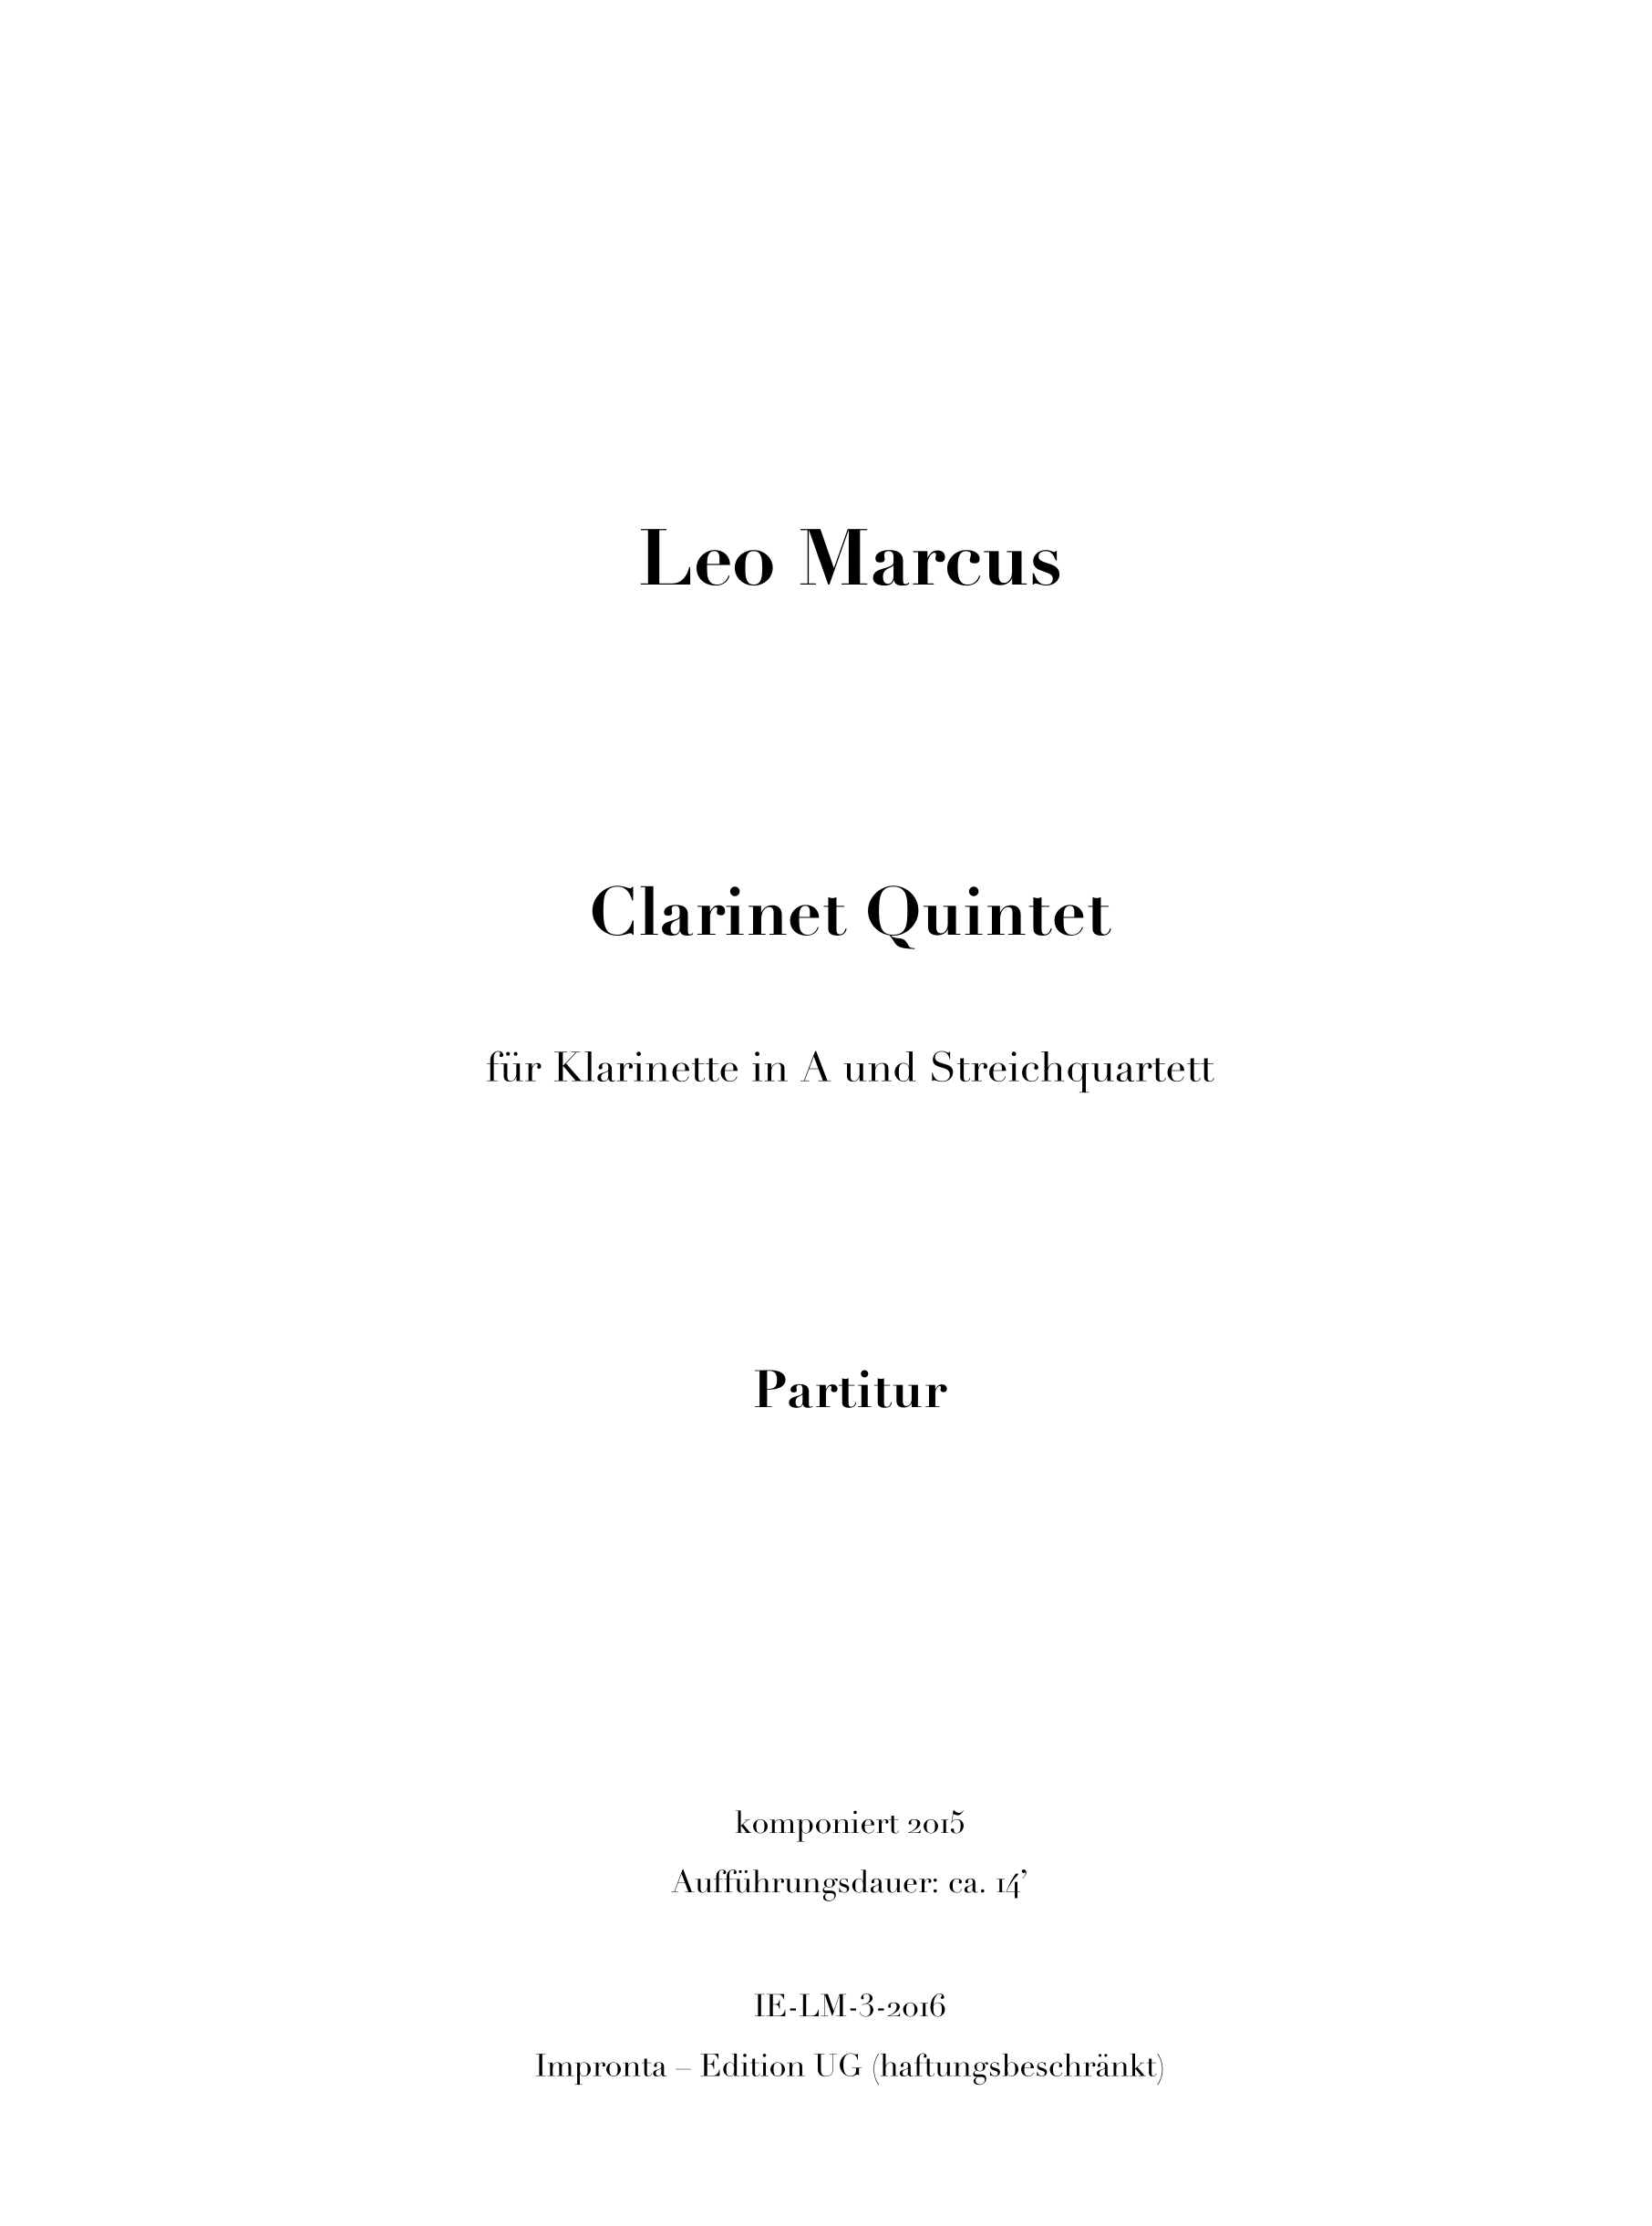 160914 Clarinet Quintet Partitur KOMPLETT 230_310 01